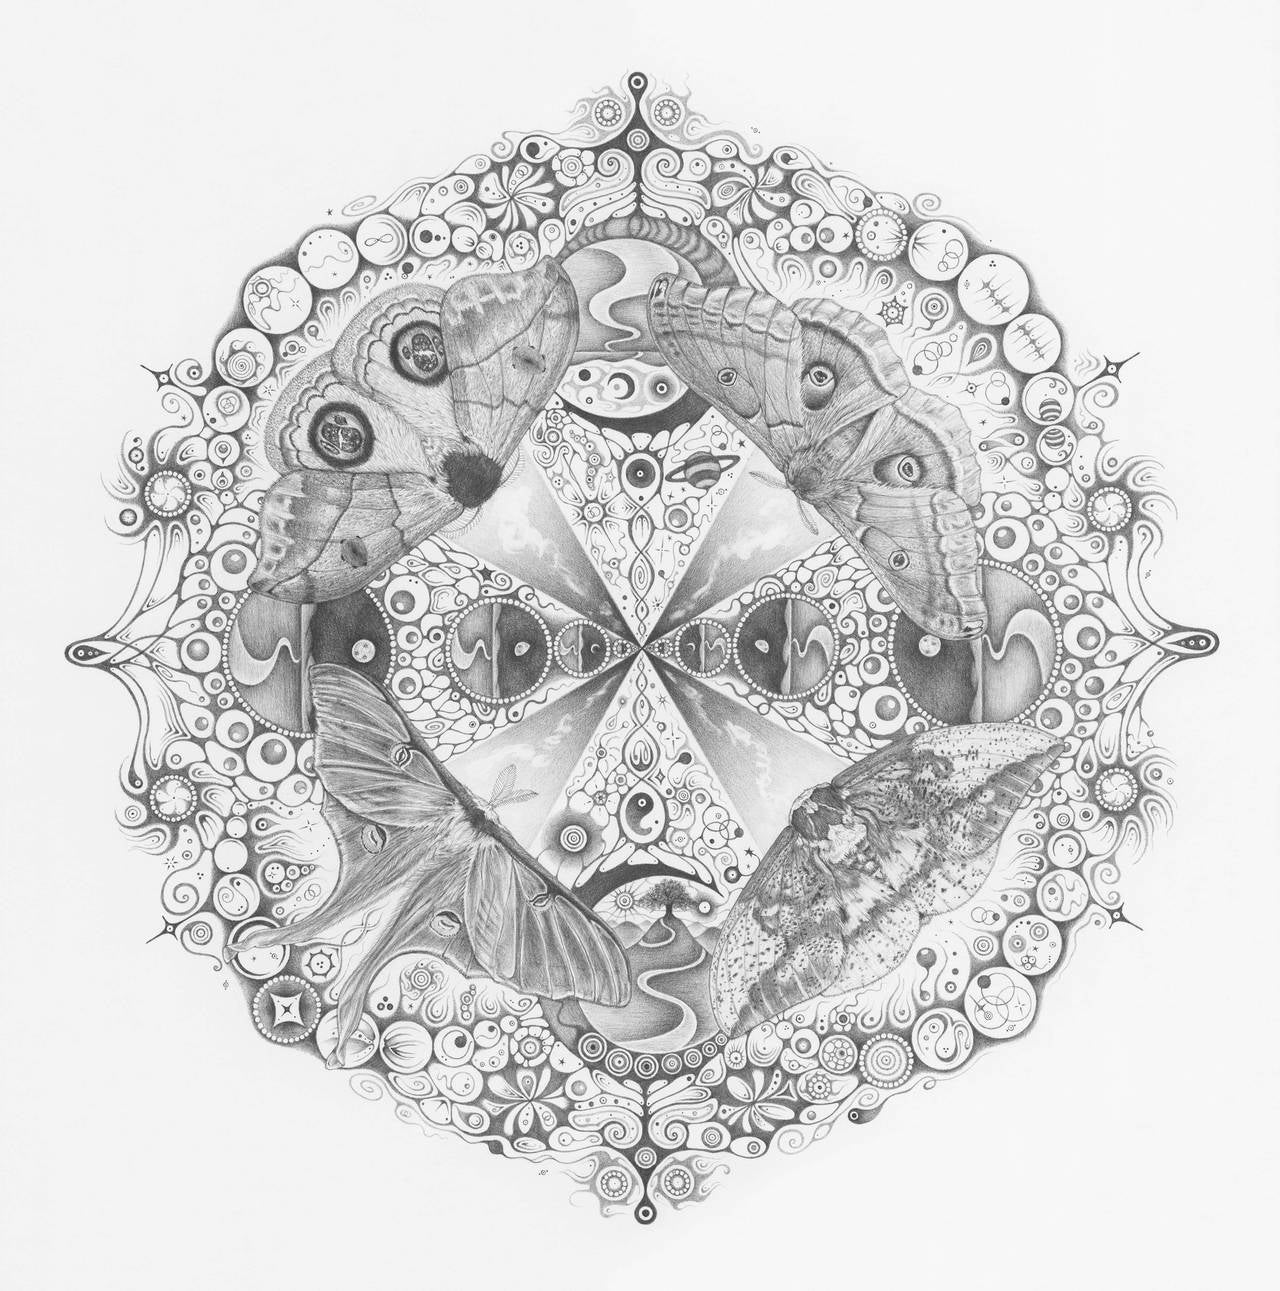 Snowflakes 139 Companions, Moths, Planets, Patterns, Mandala Pencil Drawing